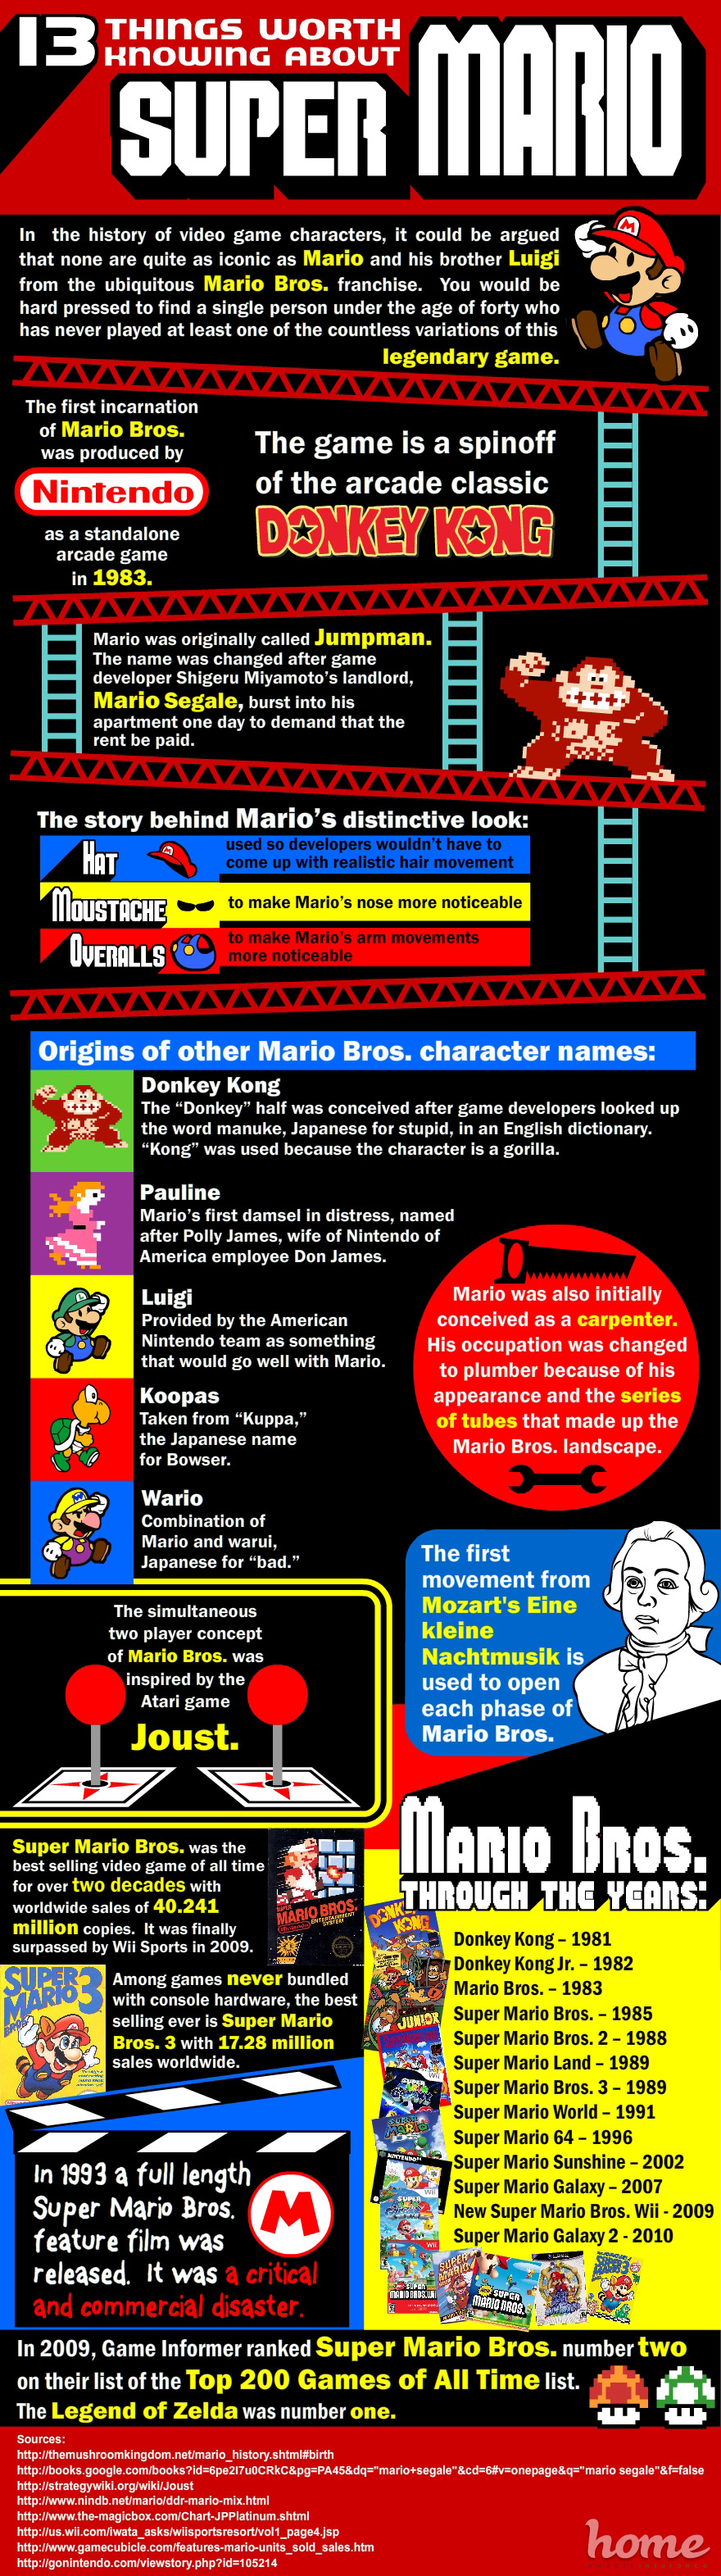 Become a super Mario expert 